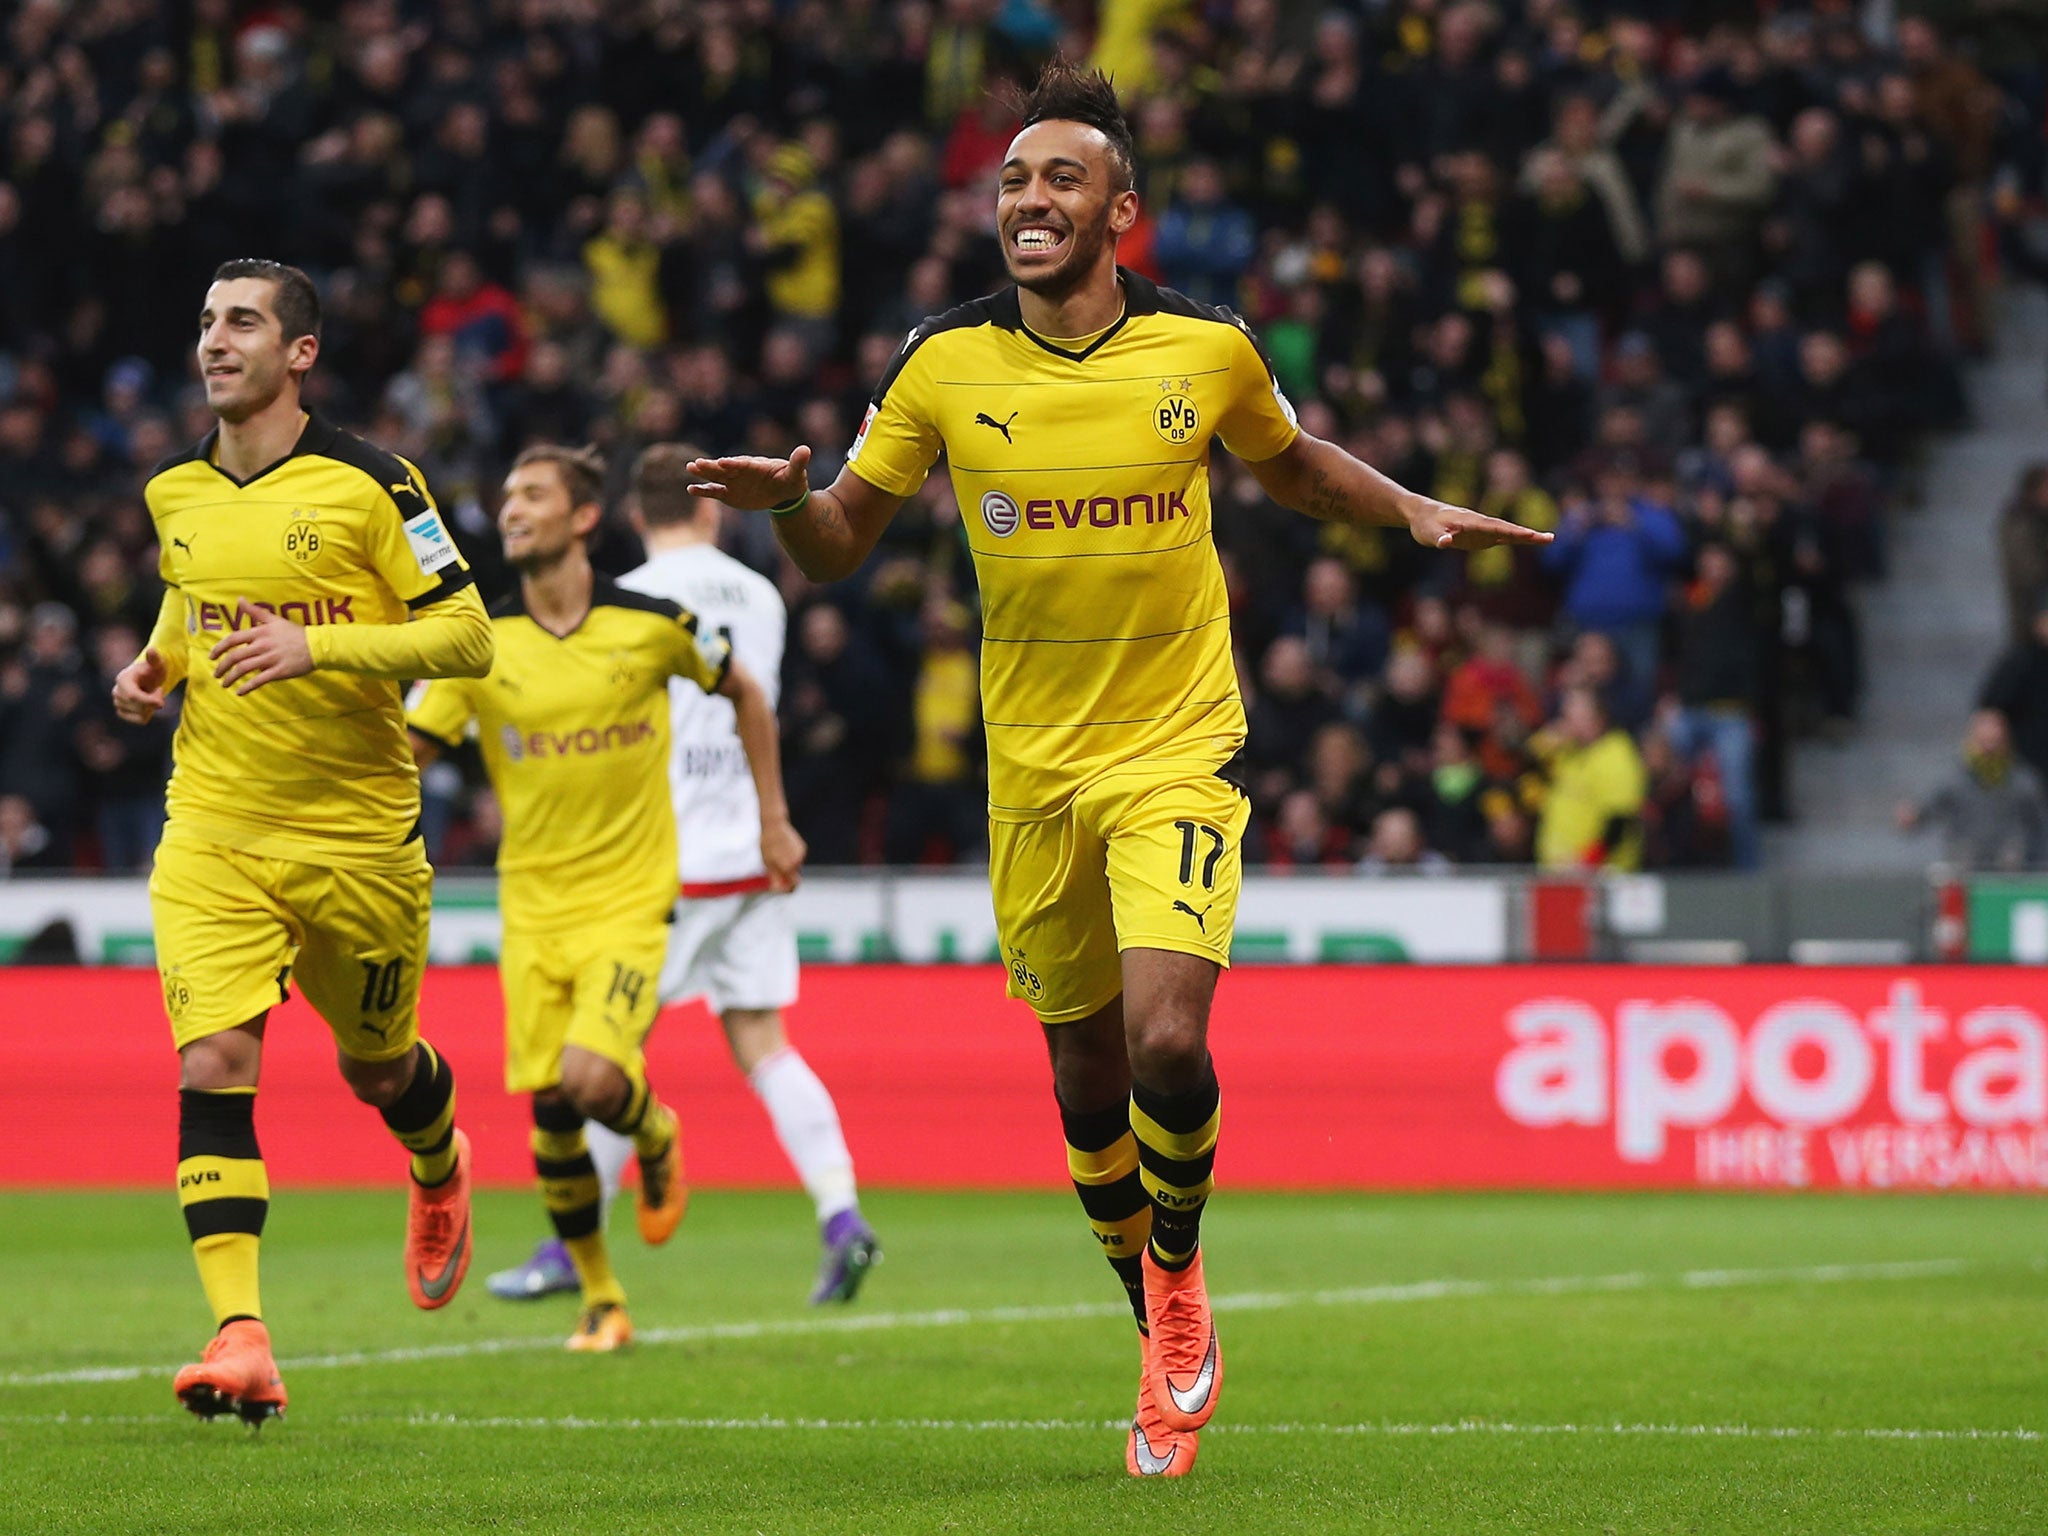 Pierre Emerick Aubameyang has been in sensational form this season for Borussia Dortmund